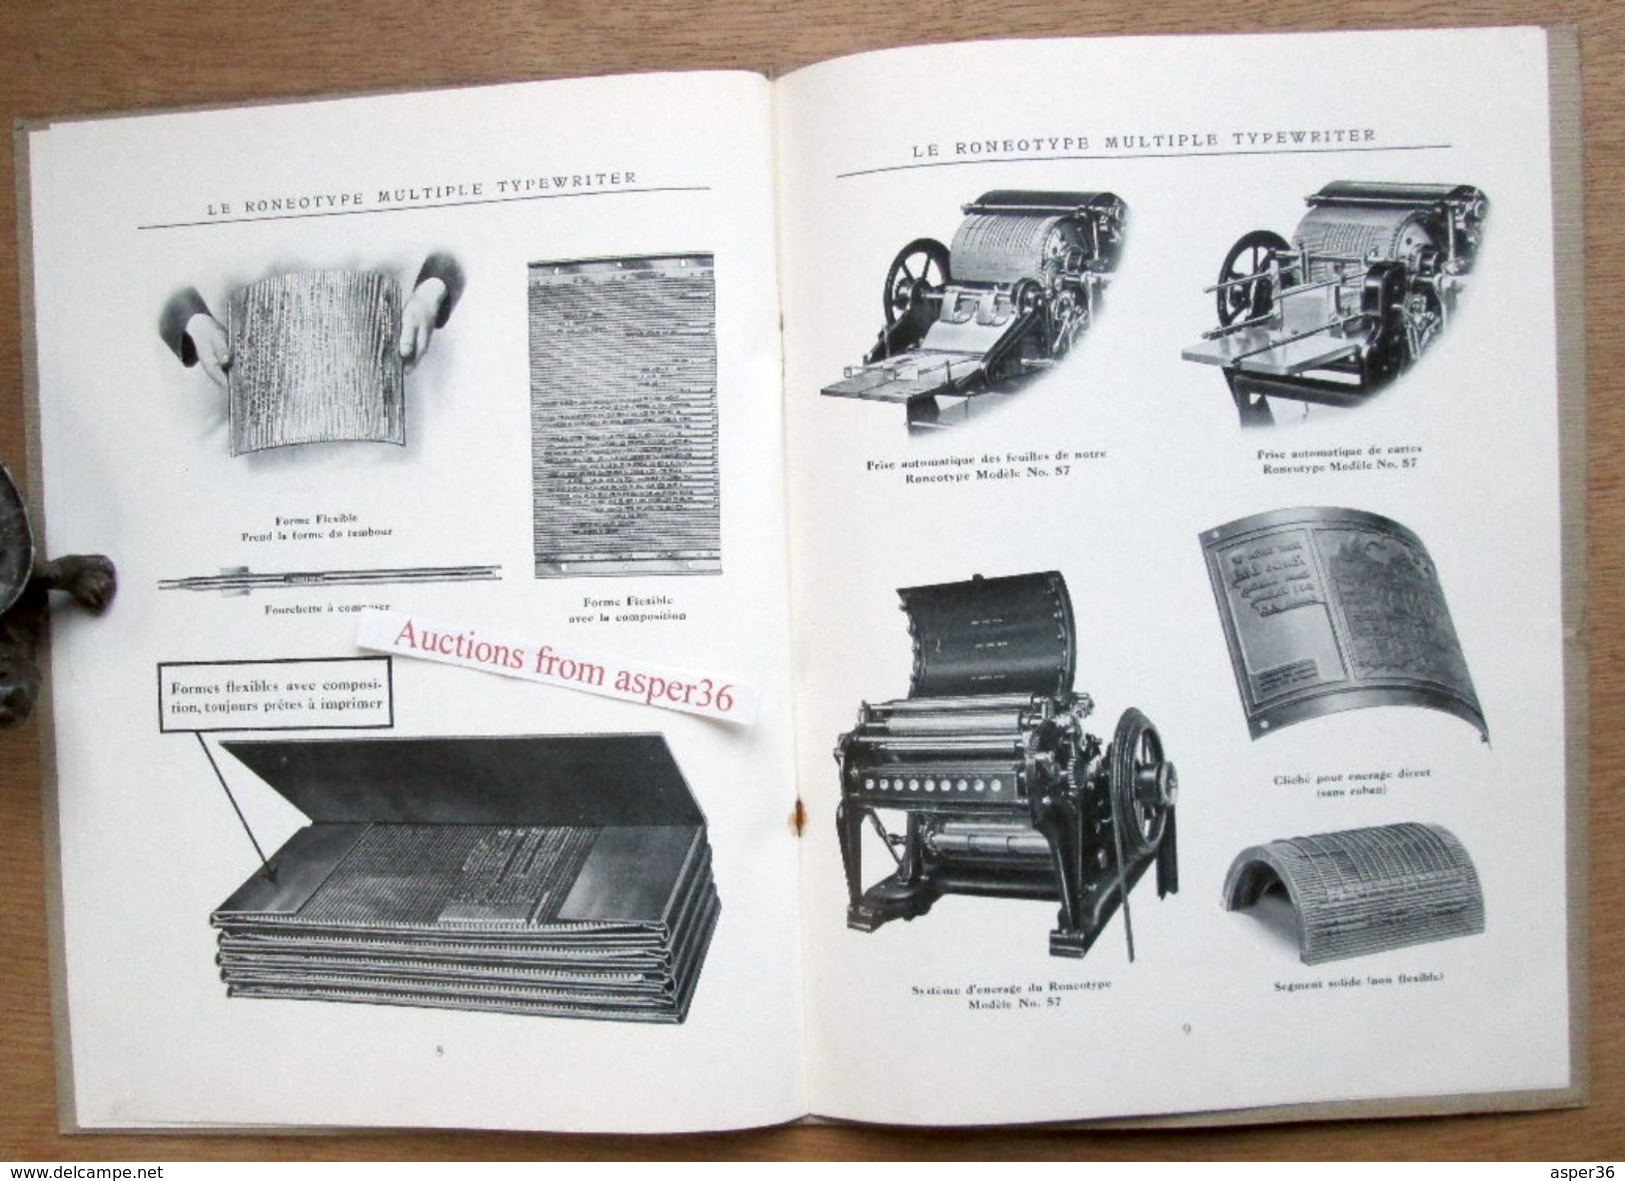 catalogue "Le Roneotype, Multiple Typewriter, Romford, Essex, England"